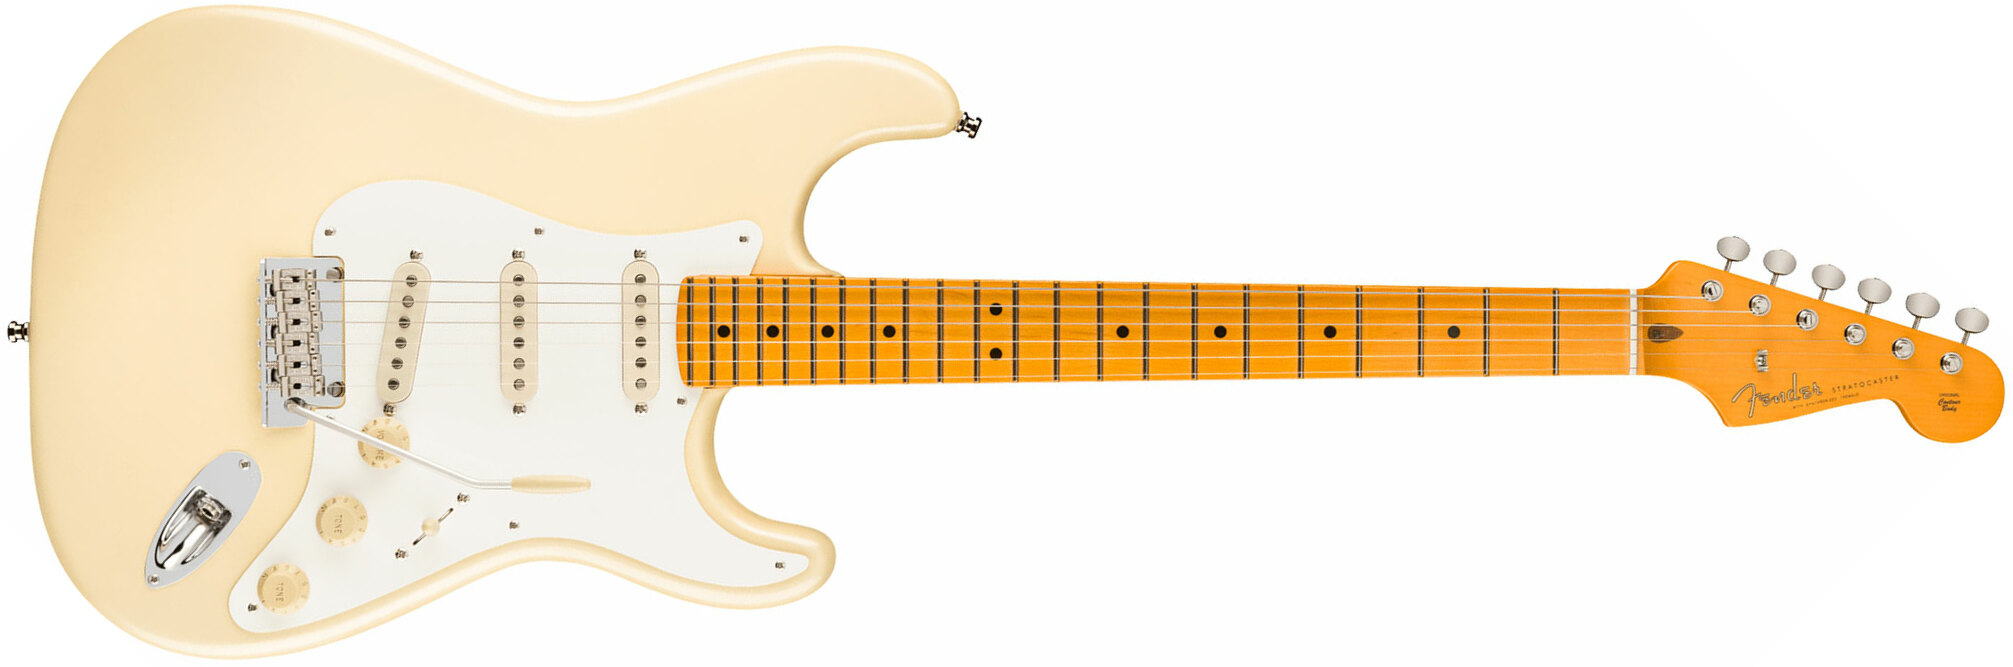 Fender Lincoln Brewster Strat Usa Signature 3s Dimarzio Trem Mn - Olympic Pearl - Guitare Électrique RÉtro Rock - Main picture